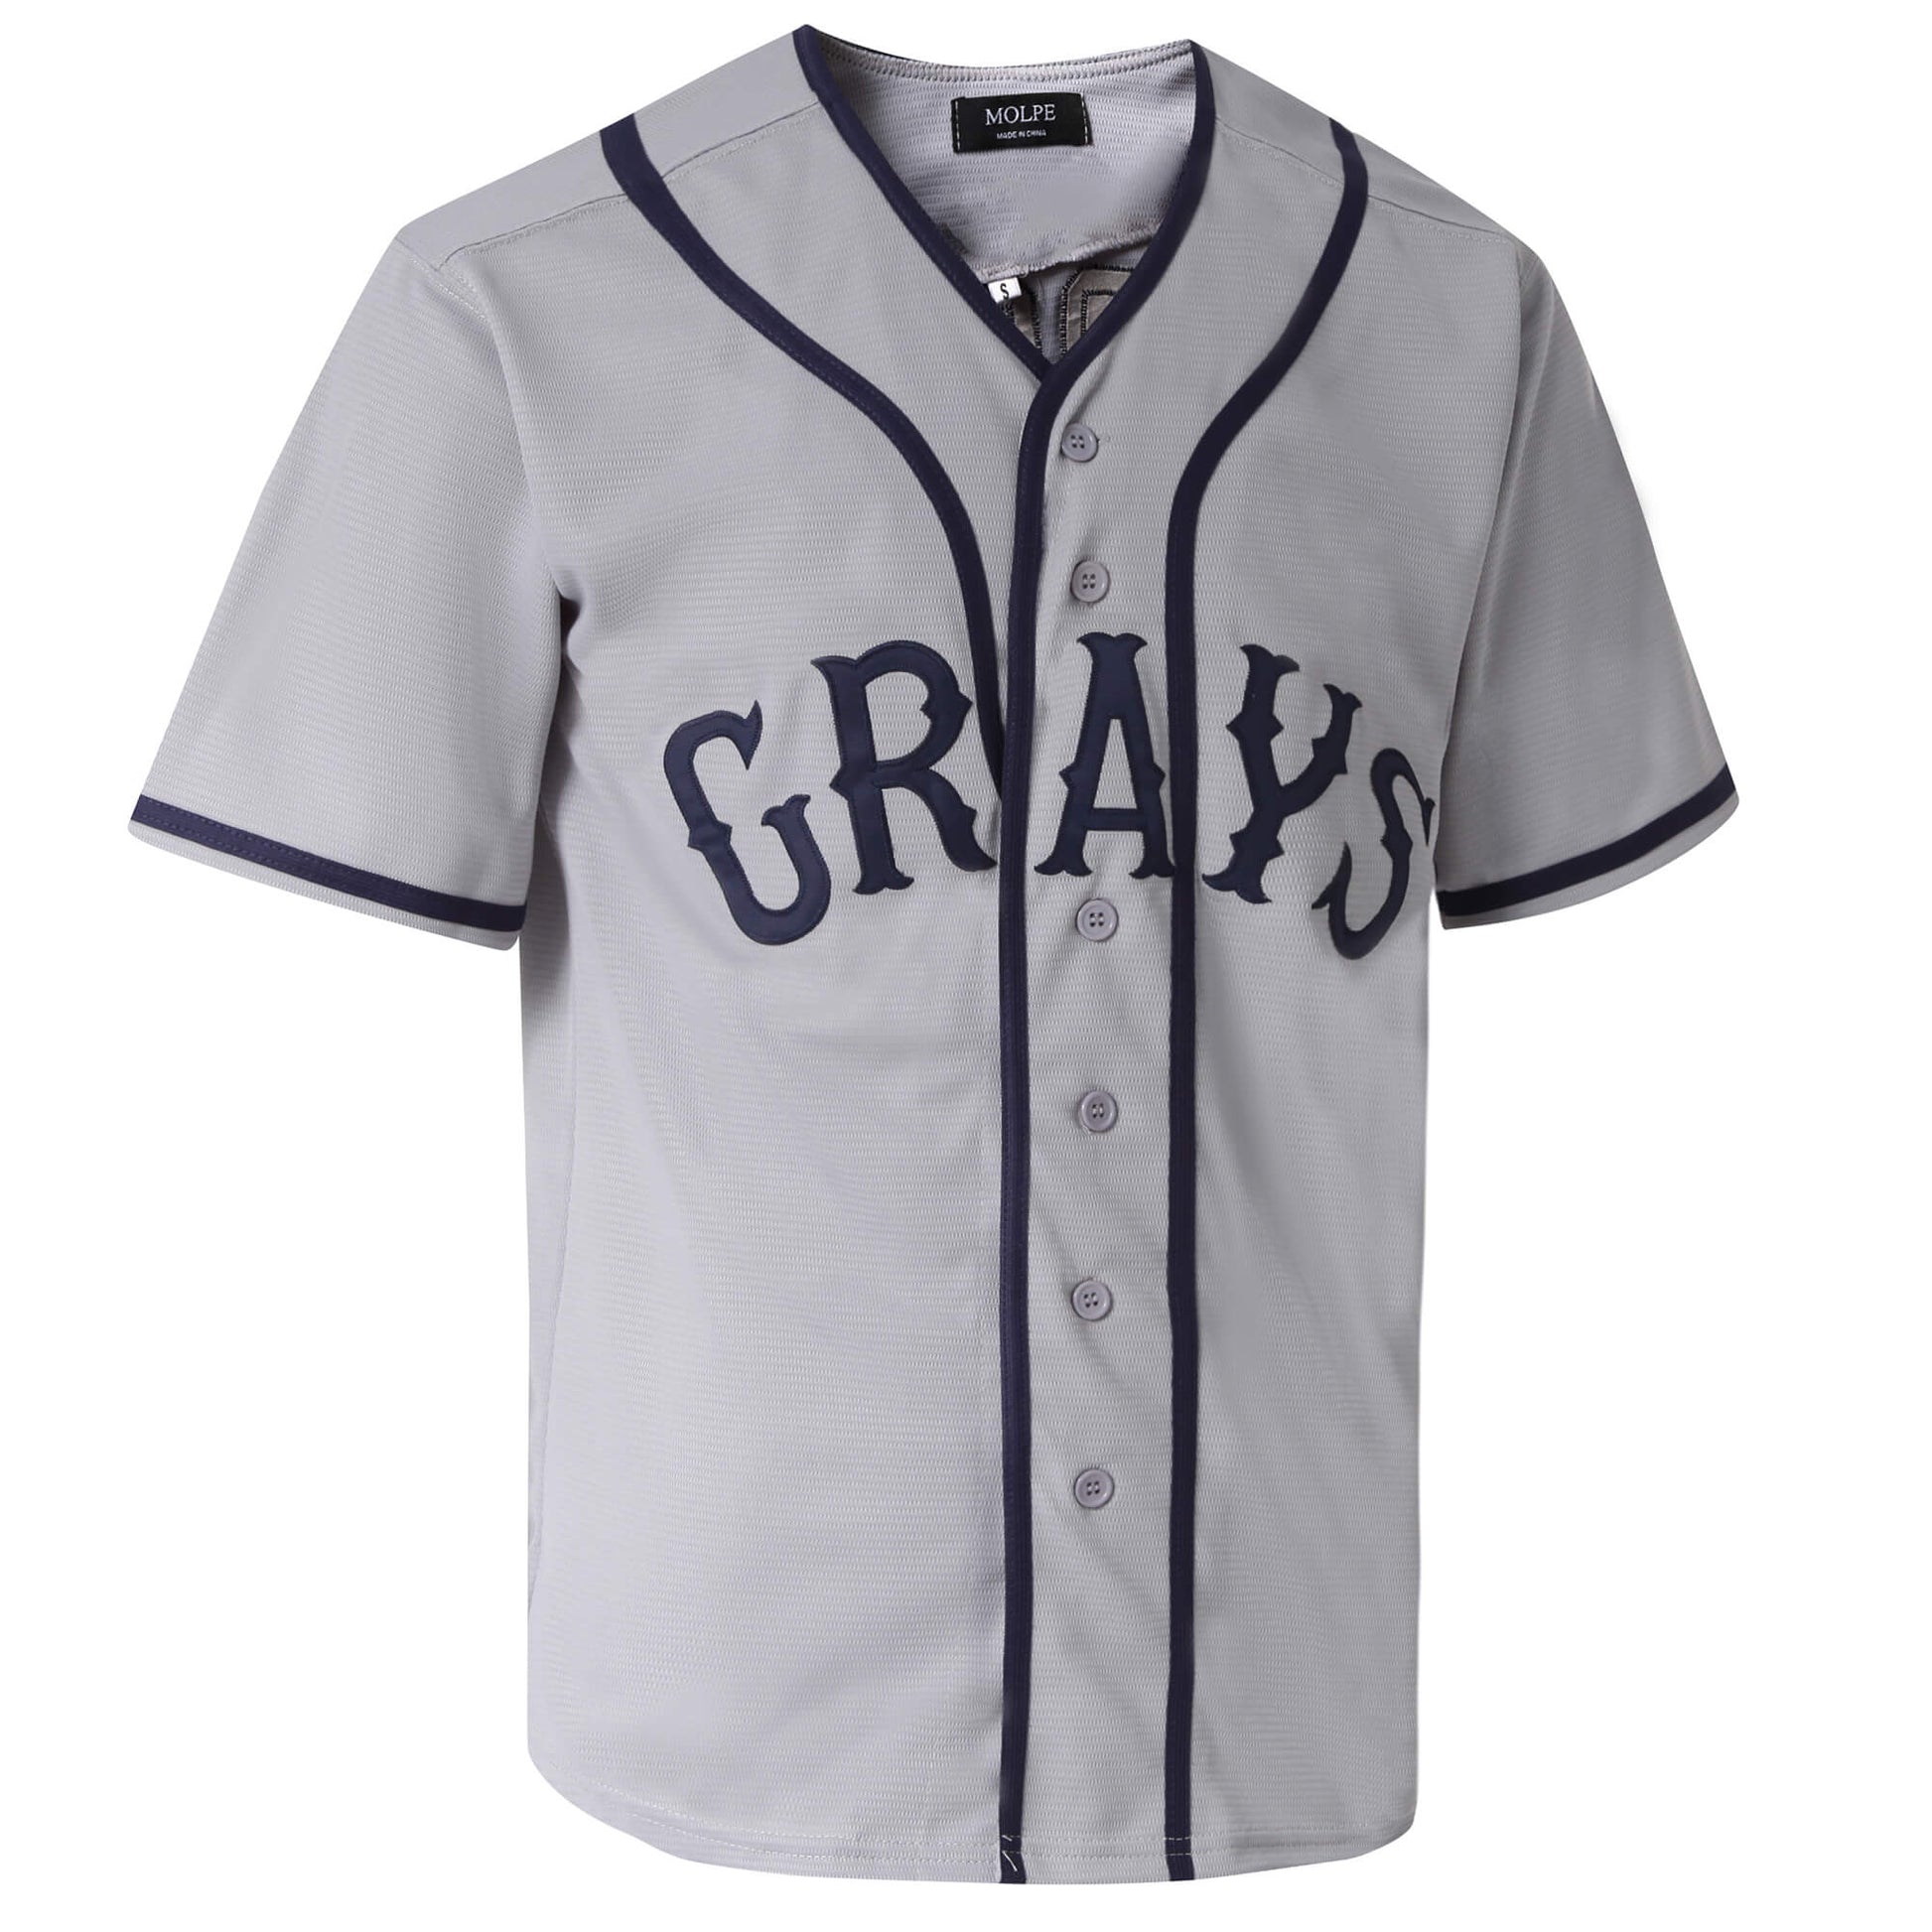 Josh Gibson Homestead Gray Baseball Jersey freeshipping - Jersey One